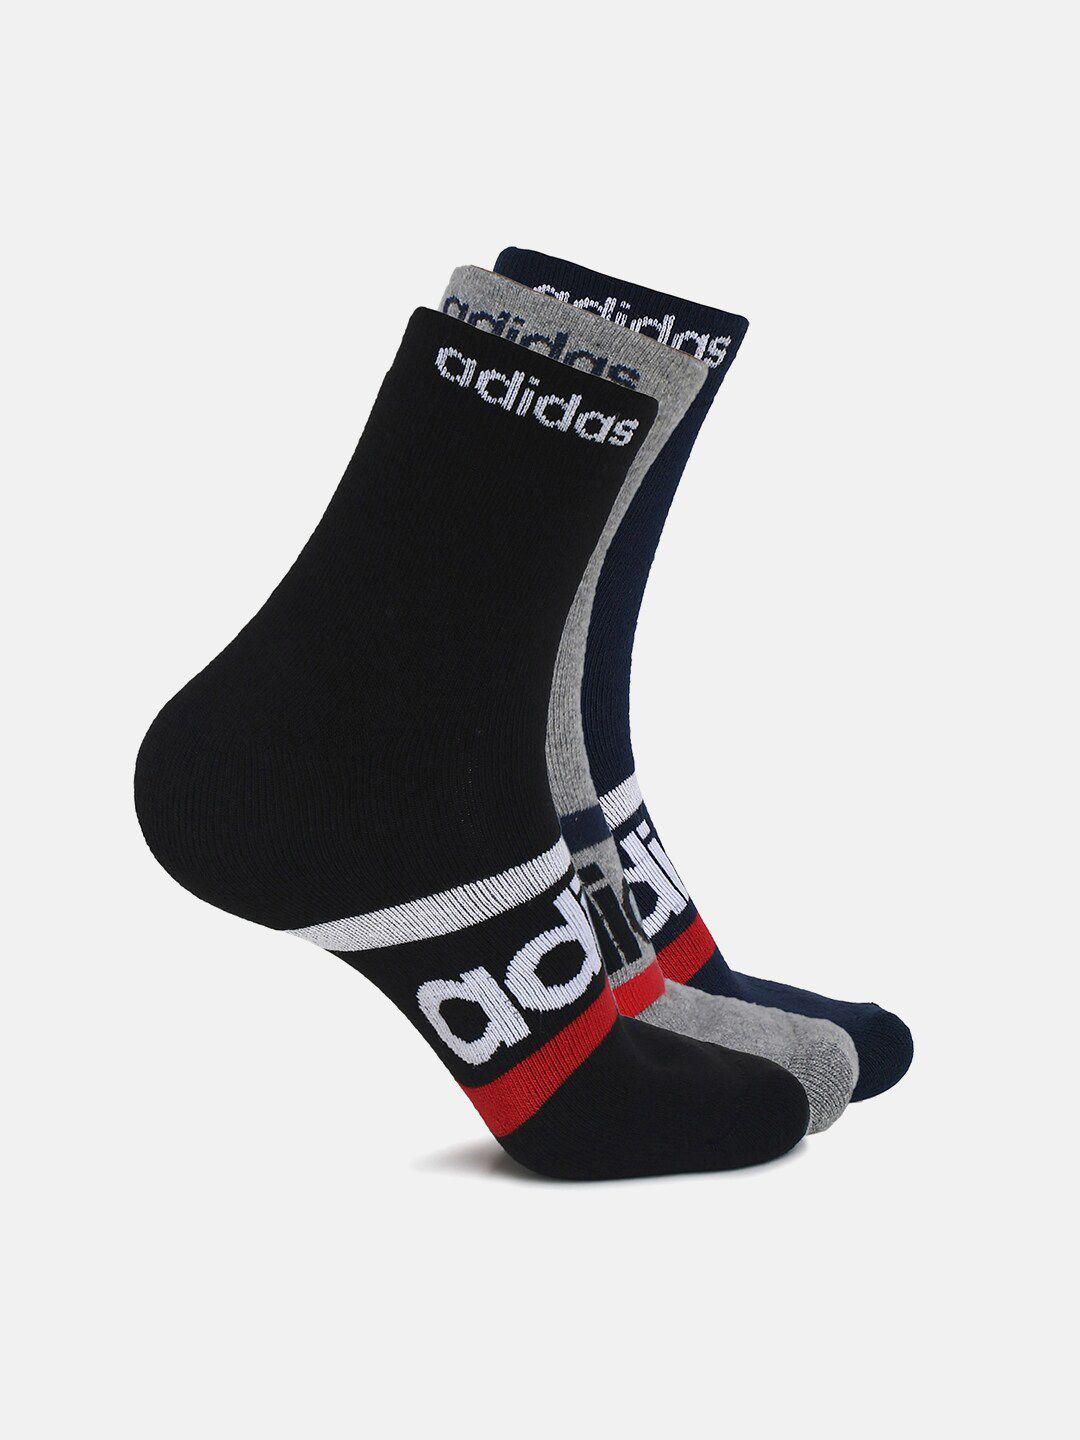 adidas-men-pack-of-3-patterned-cotton-socks